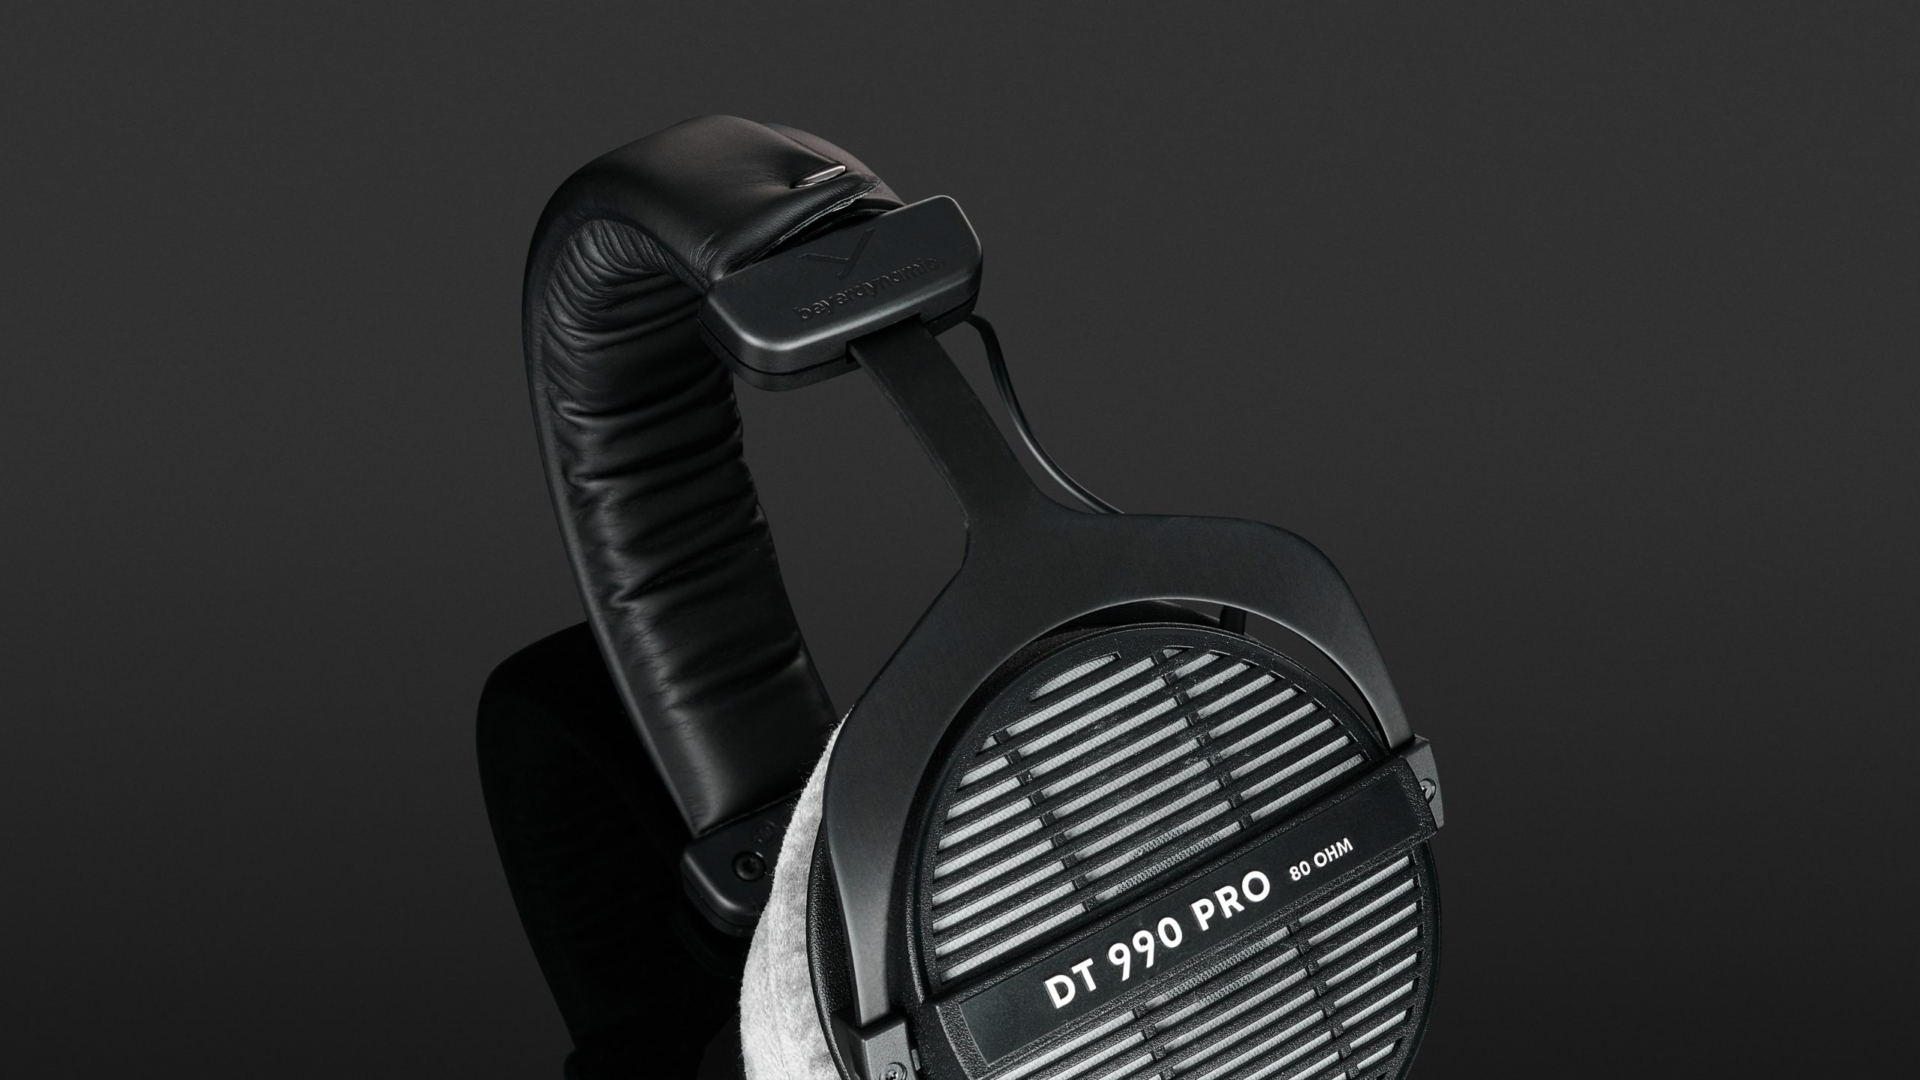 beyerdynamic DT-990 Pro 80 Ohms